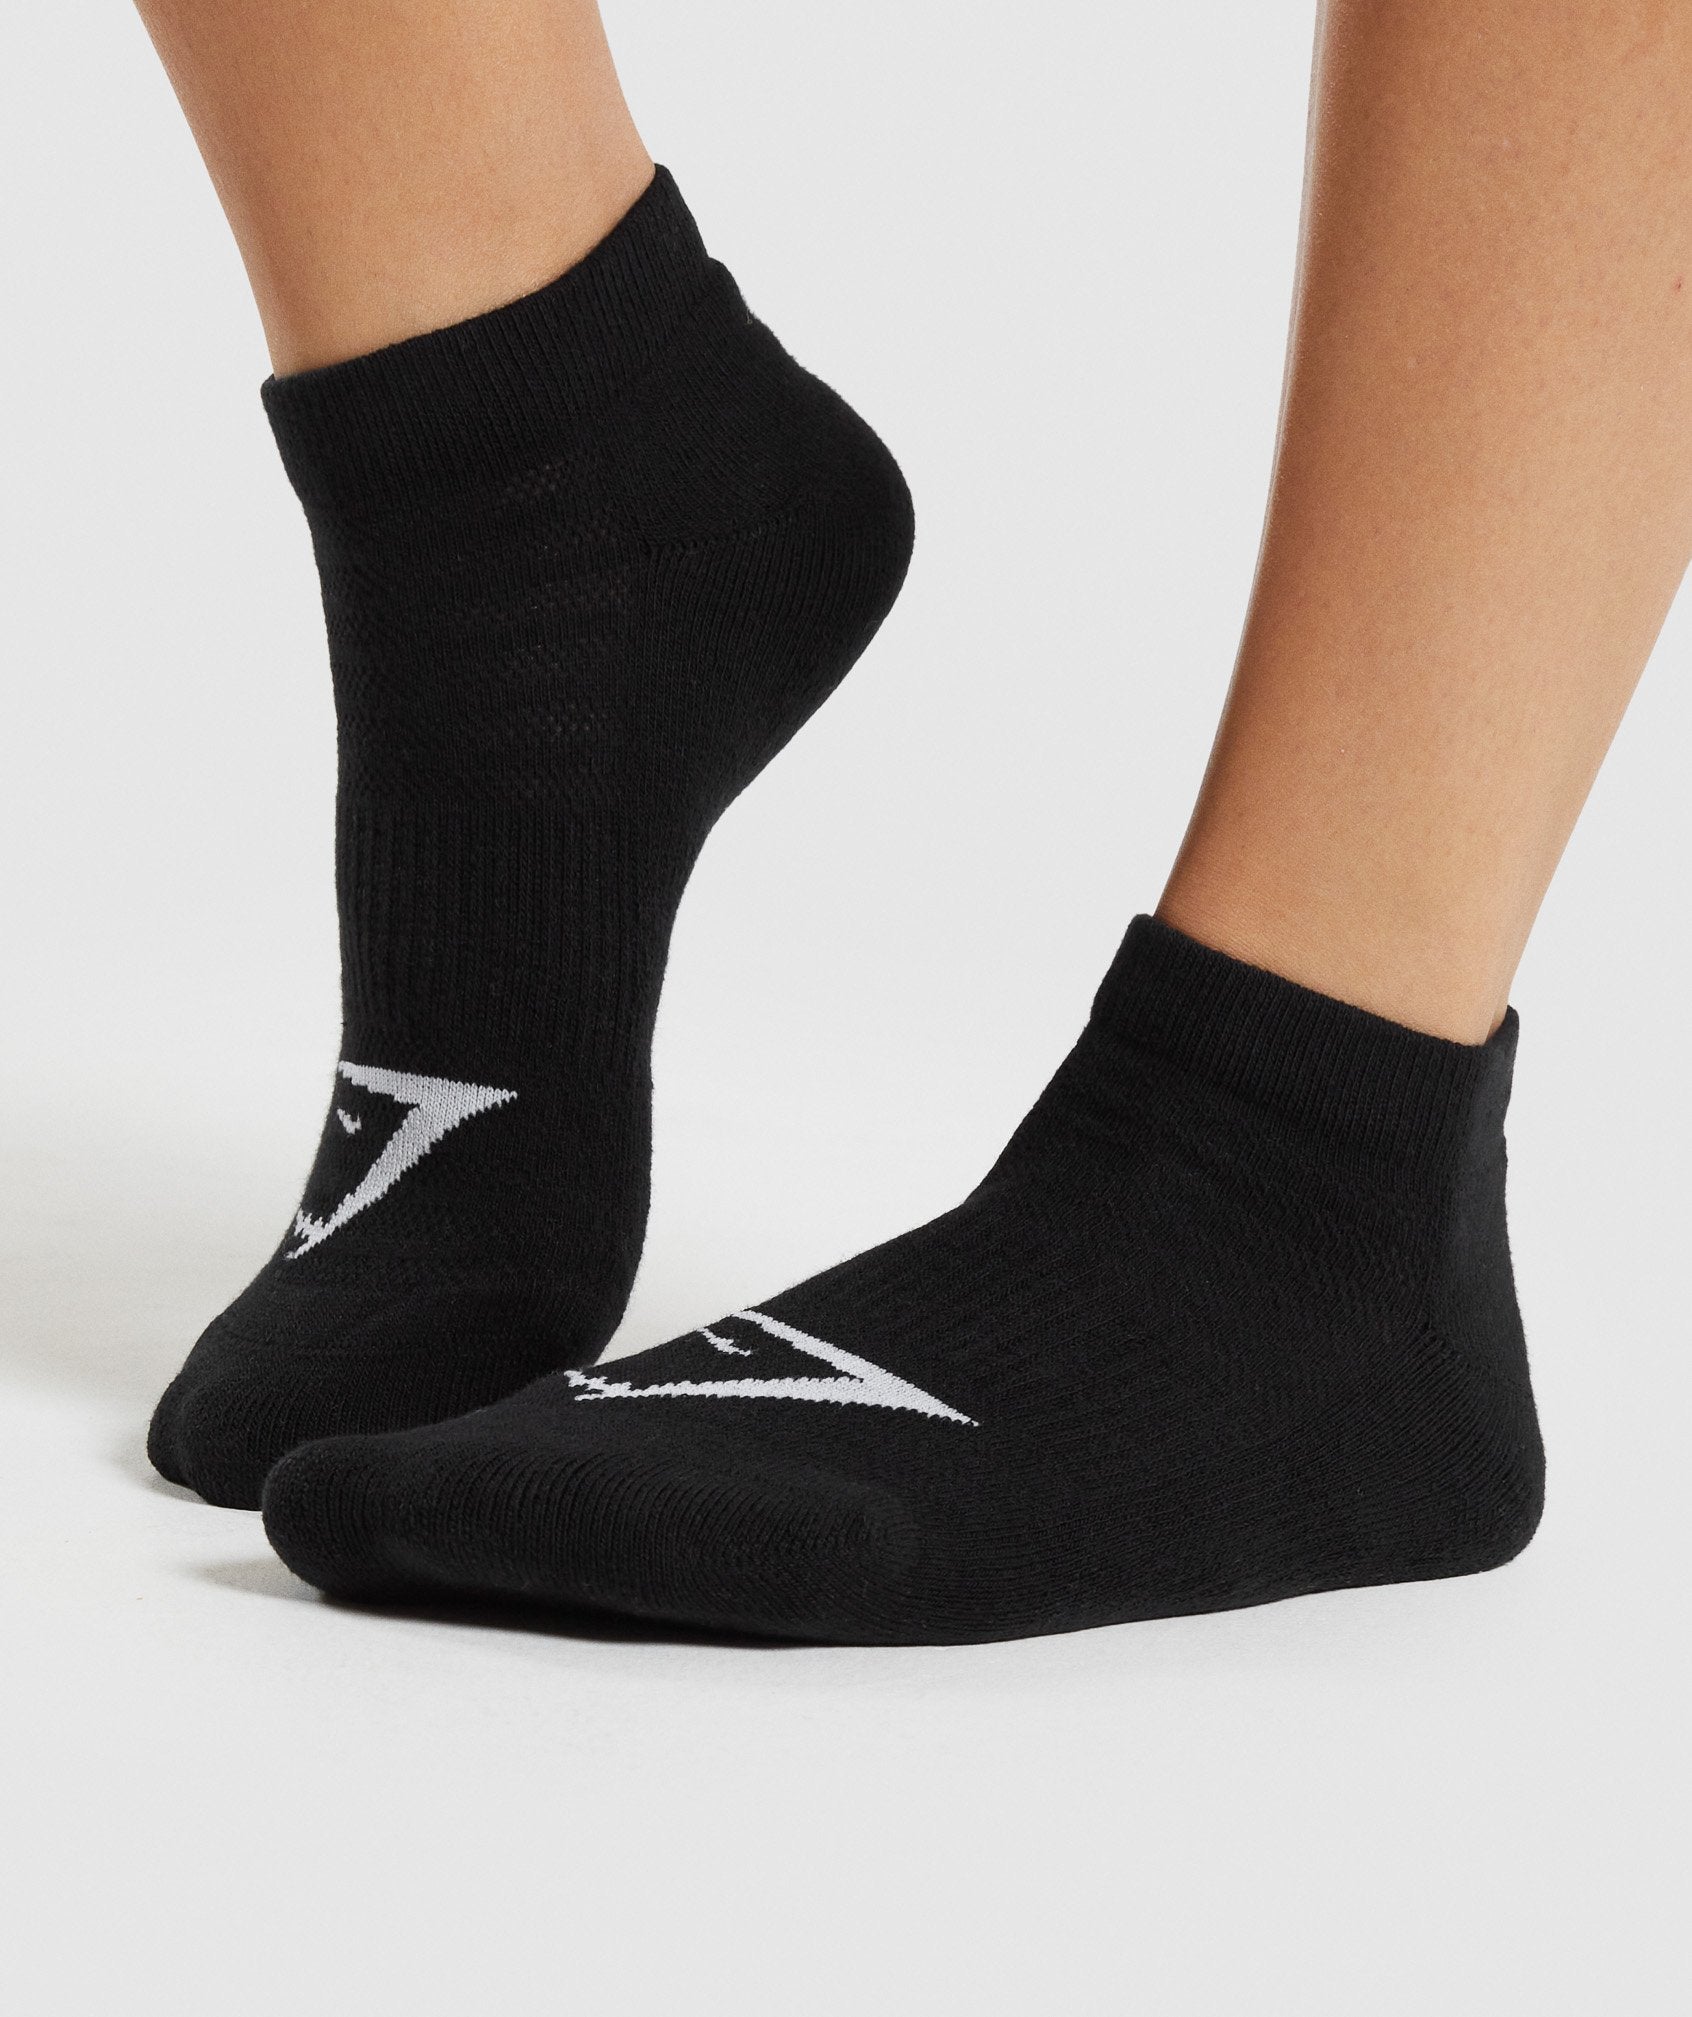 Gymnastics socks for training - Sportwear FlySport